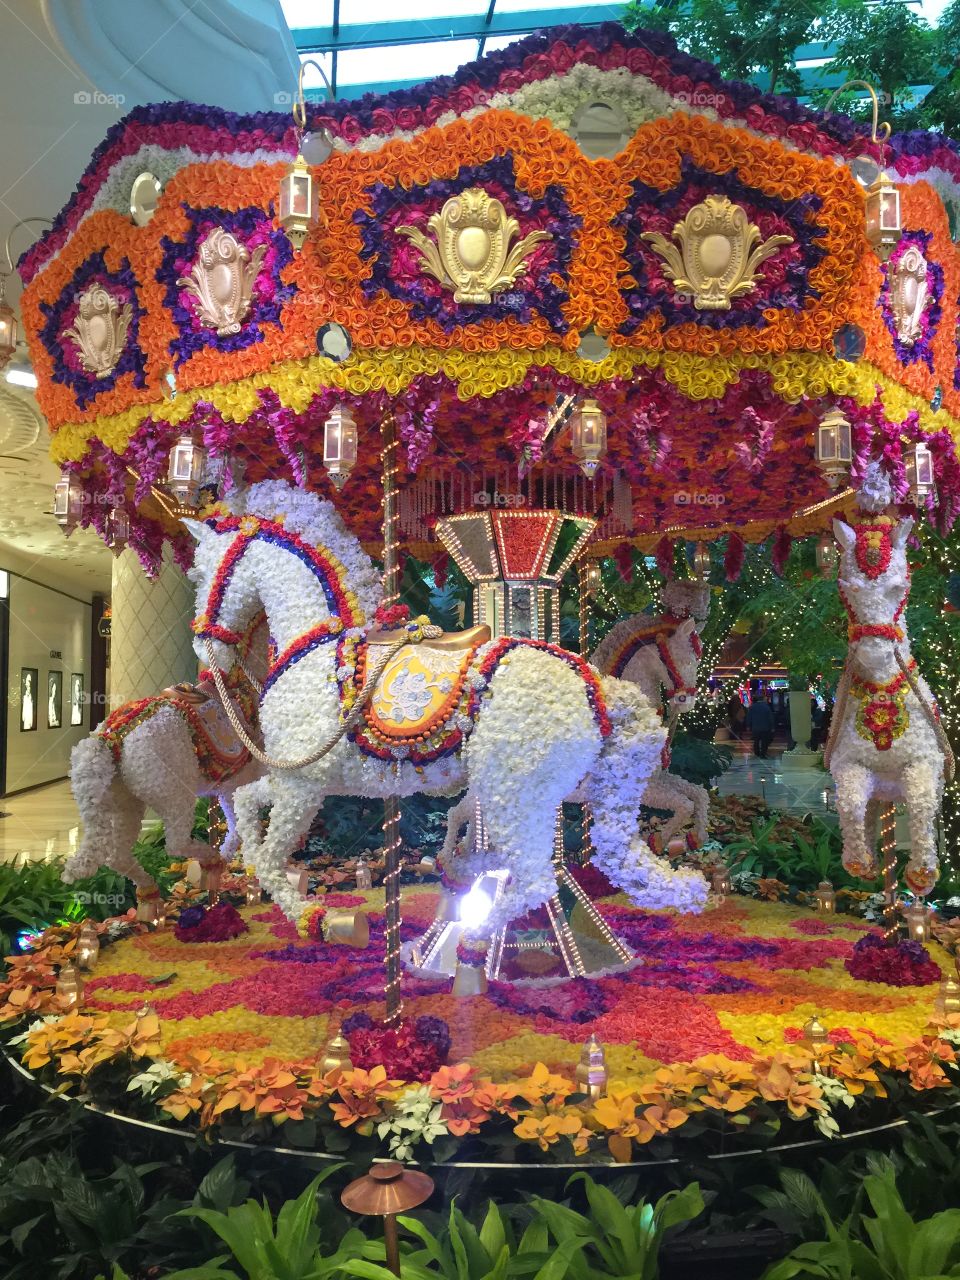 Carousel of flowers at WynnLas Vegas